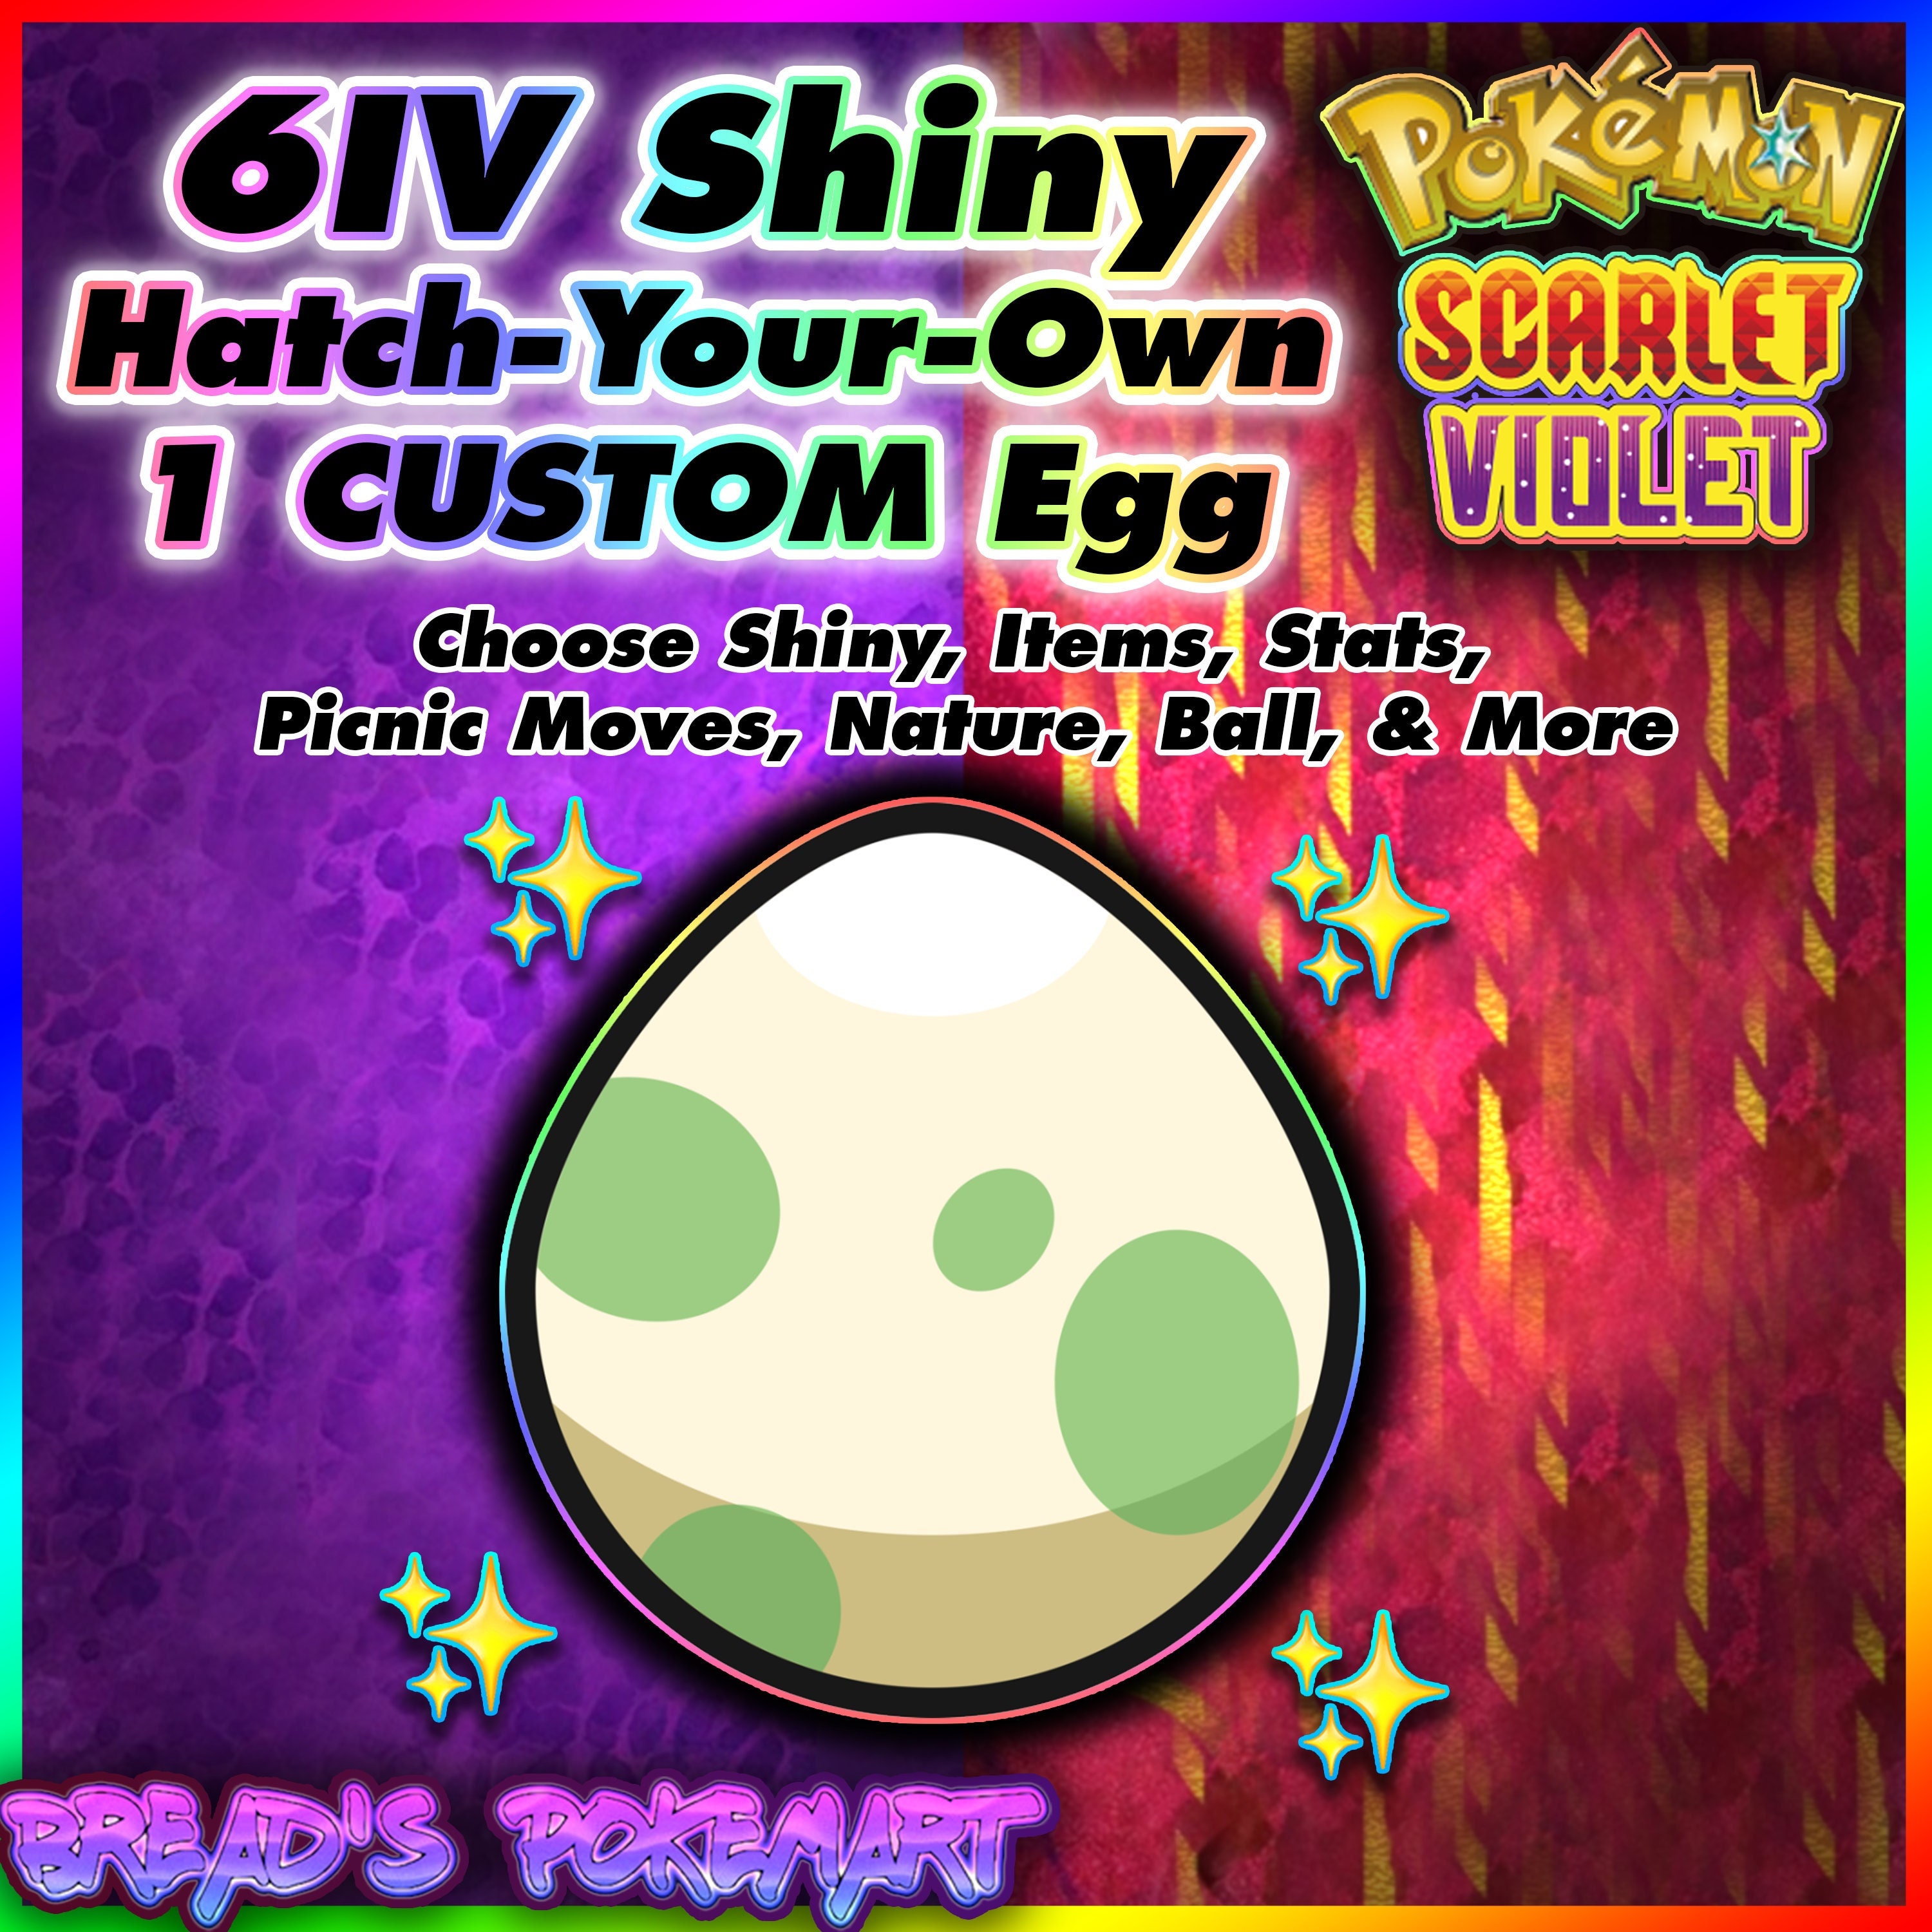 ✨ Ultra Shiny Gengar ✨ Pokemon Violet Scarlet ✨ Max Stats All Moves 6 IV